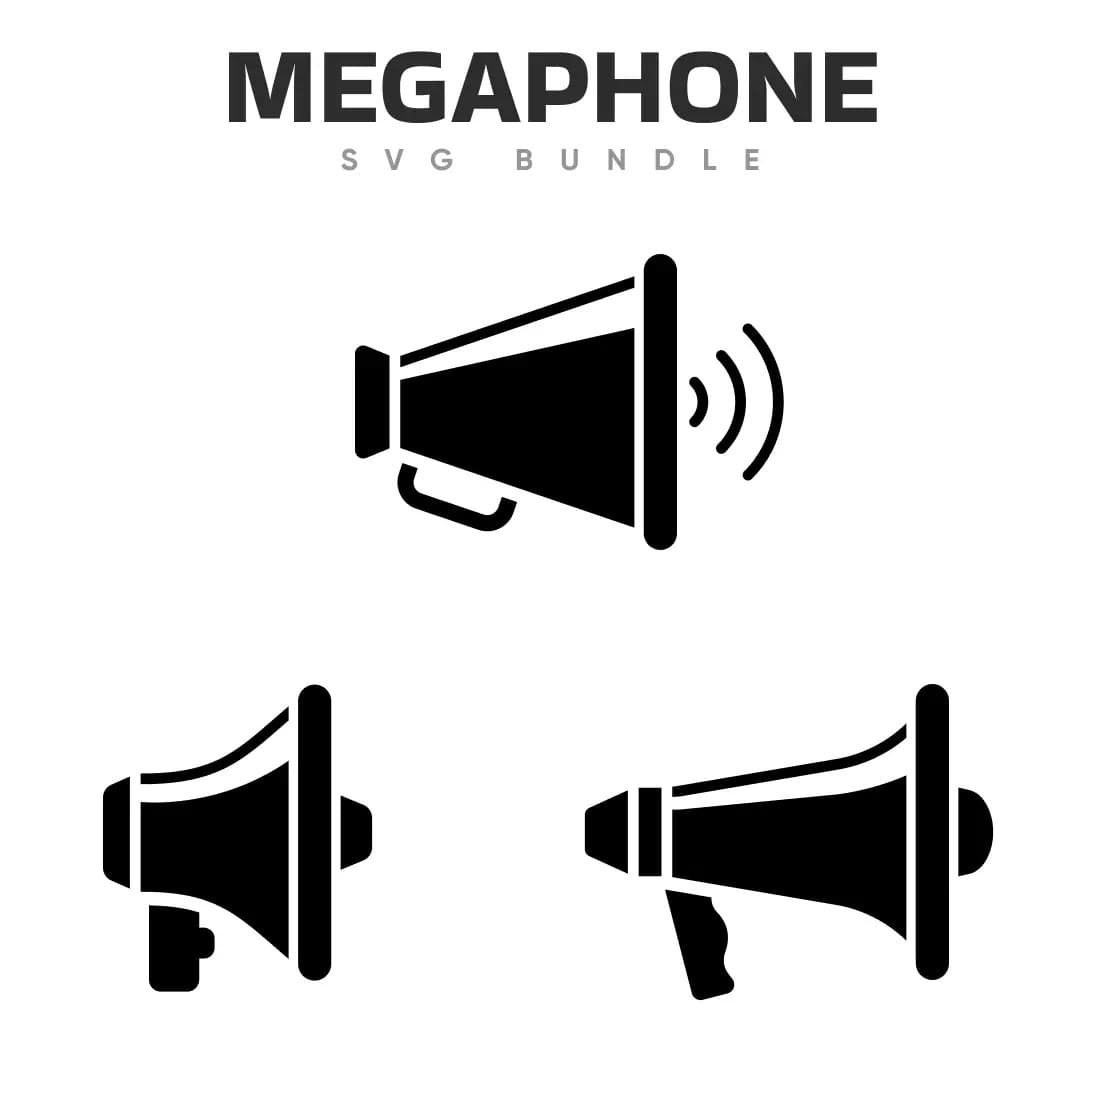 Megaphone SVG Bundle Preview 1.